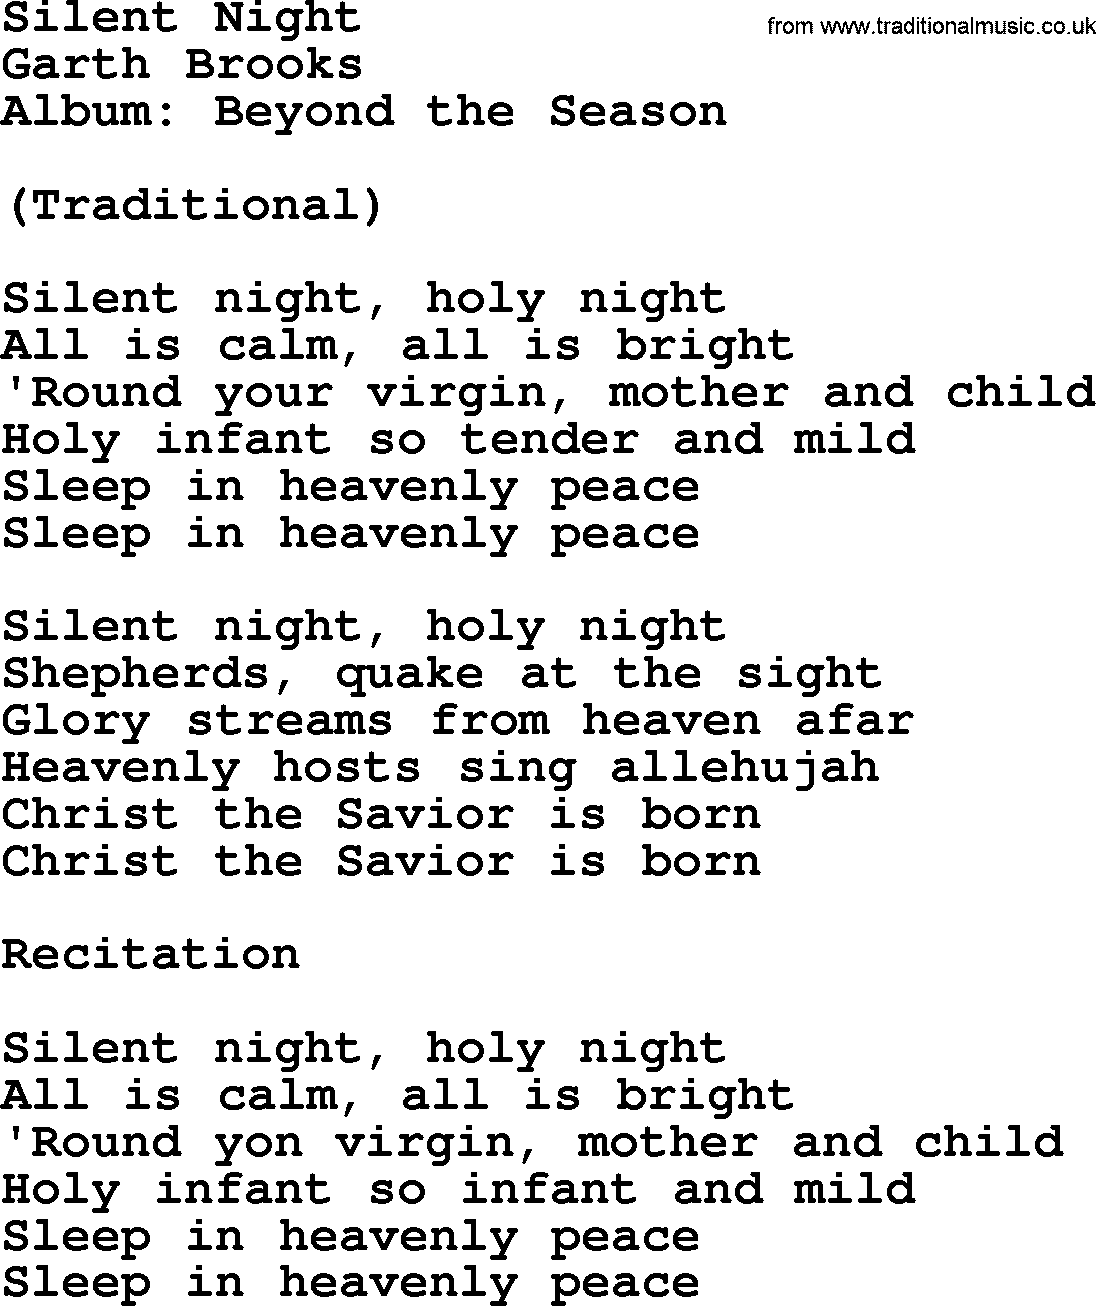 Silent Night, by Garth Brooks - lyrics